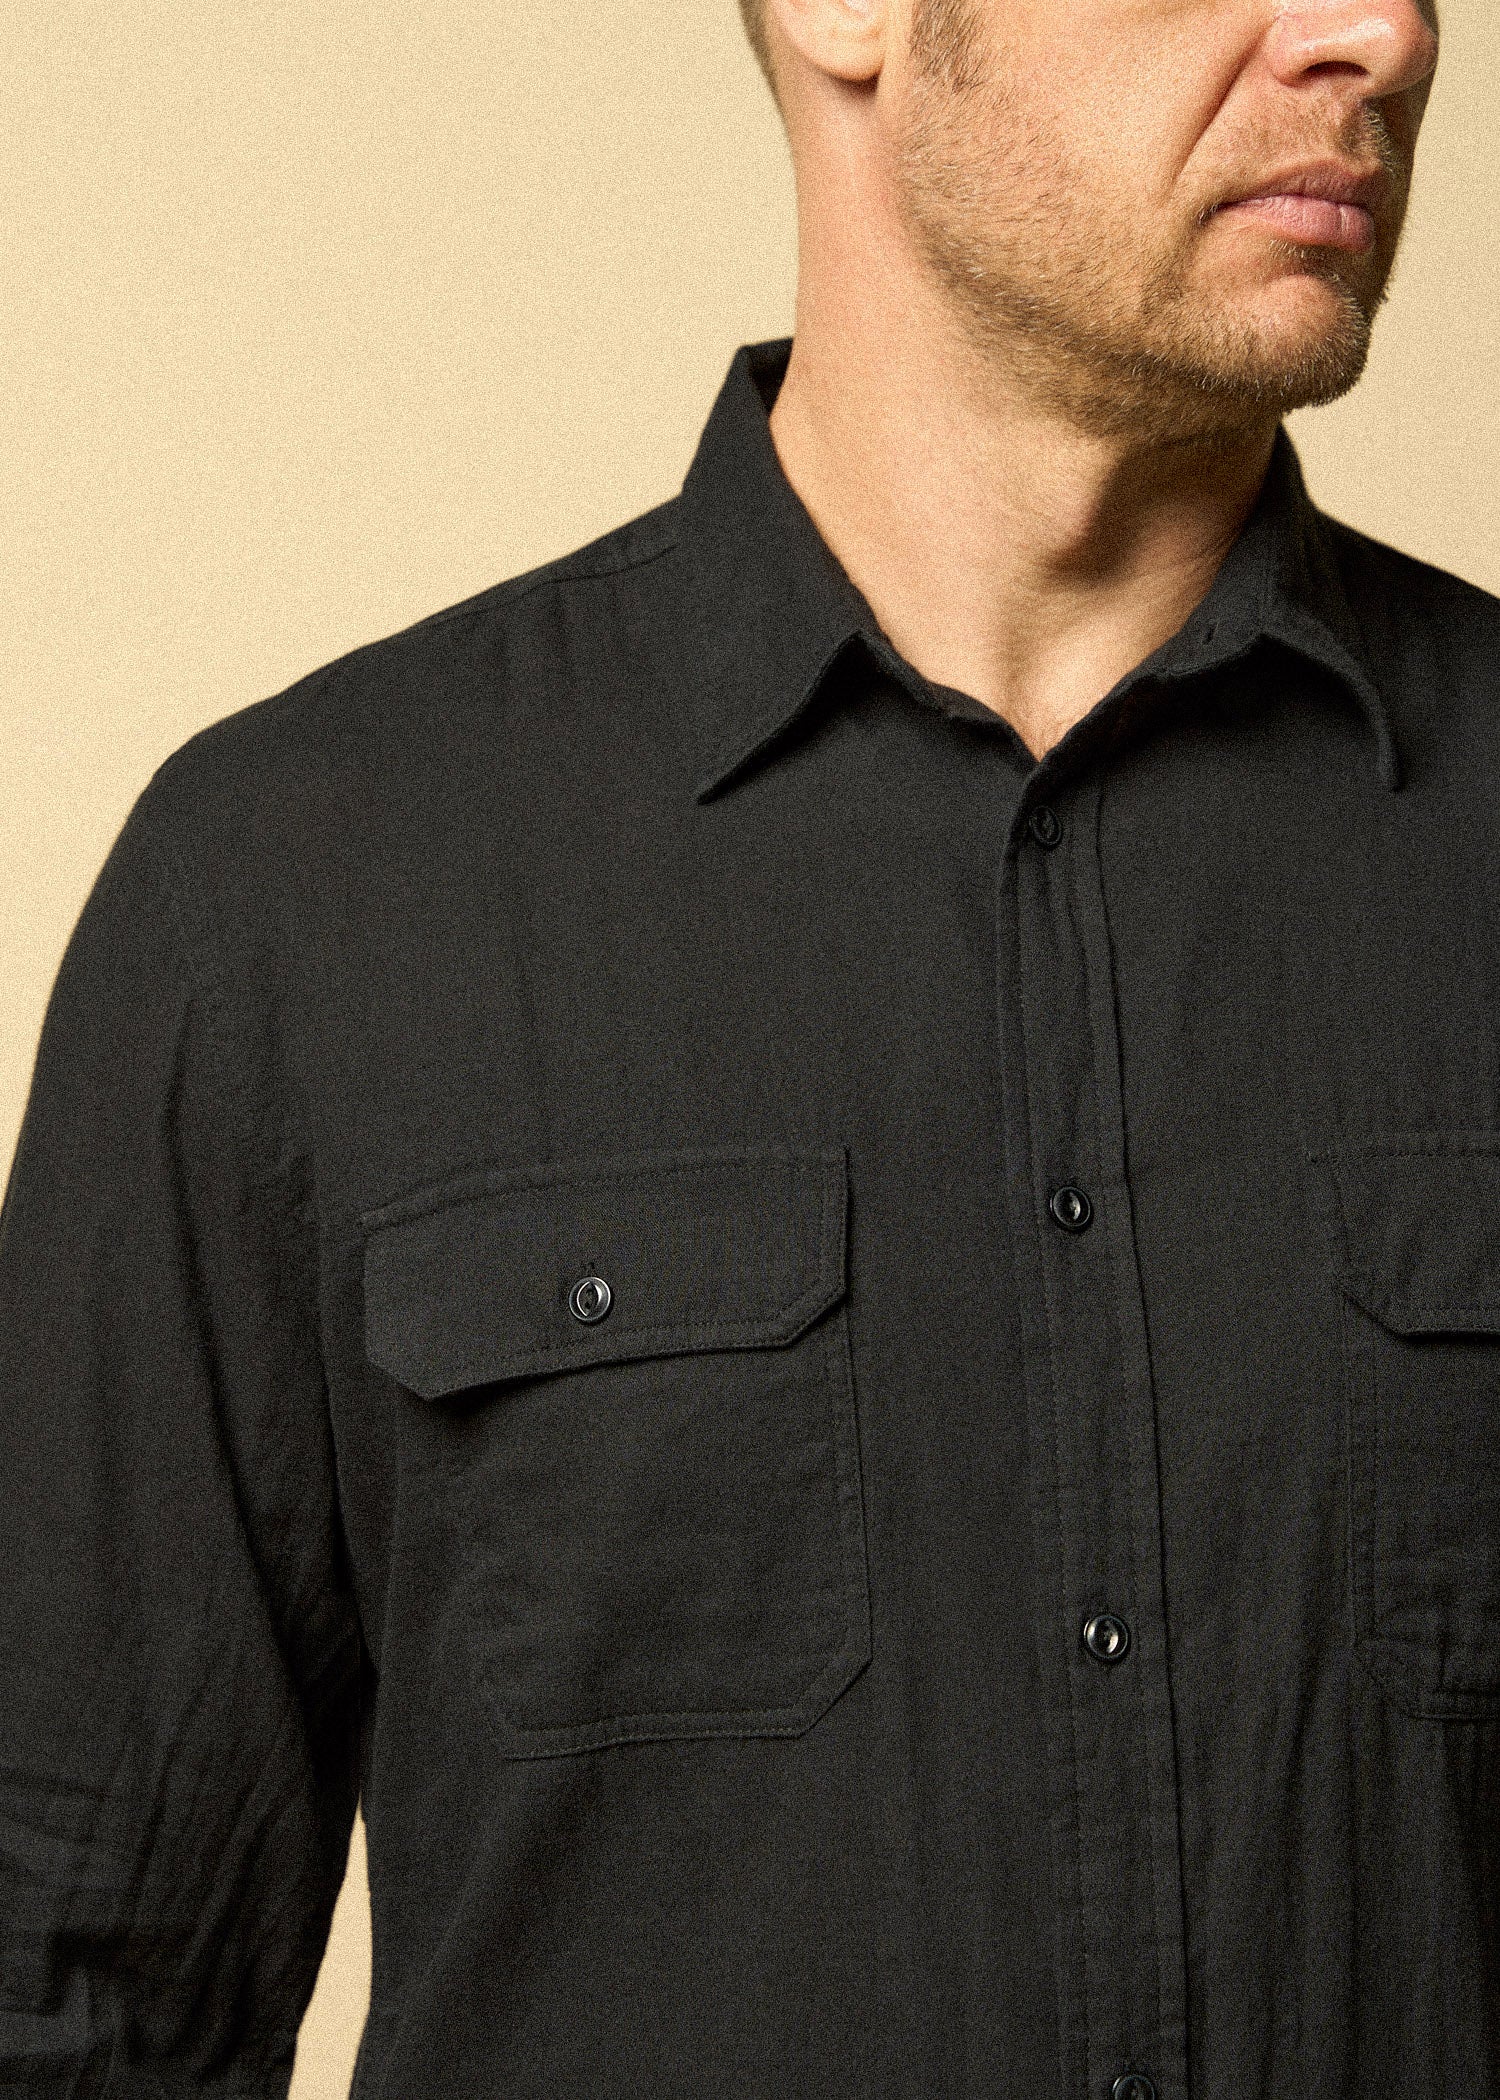    LJ-Men-Double-Weave-Shirt-Vintage-Black-detail